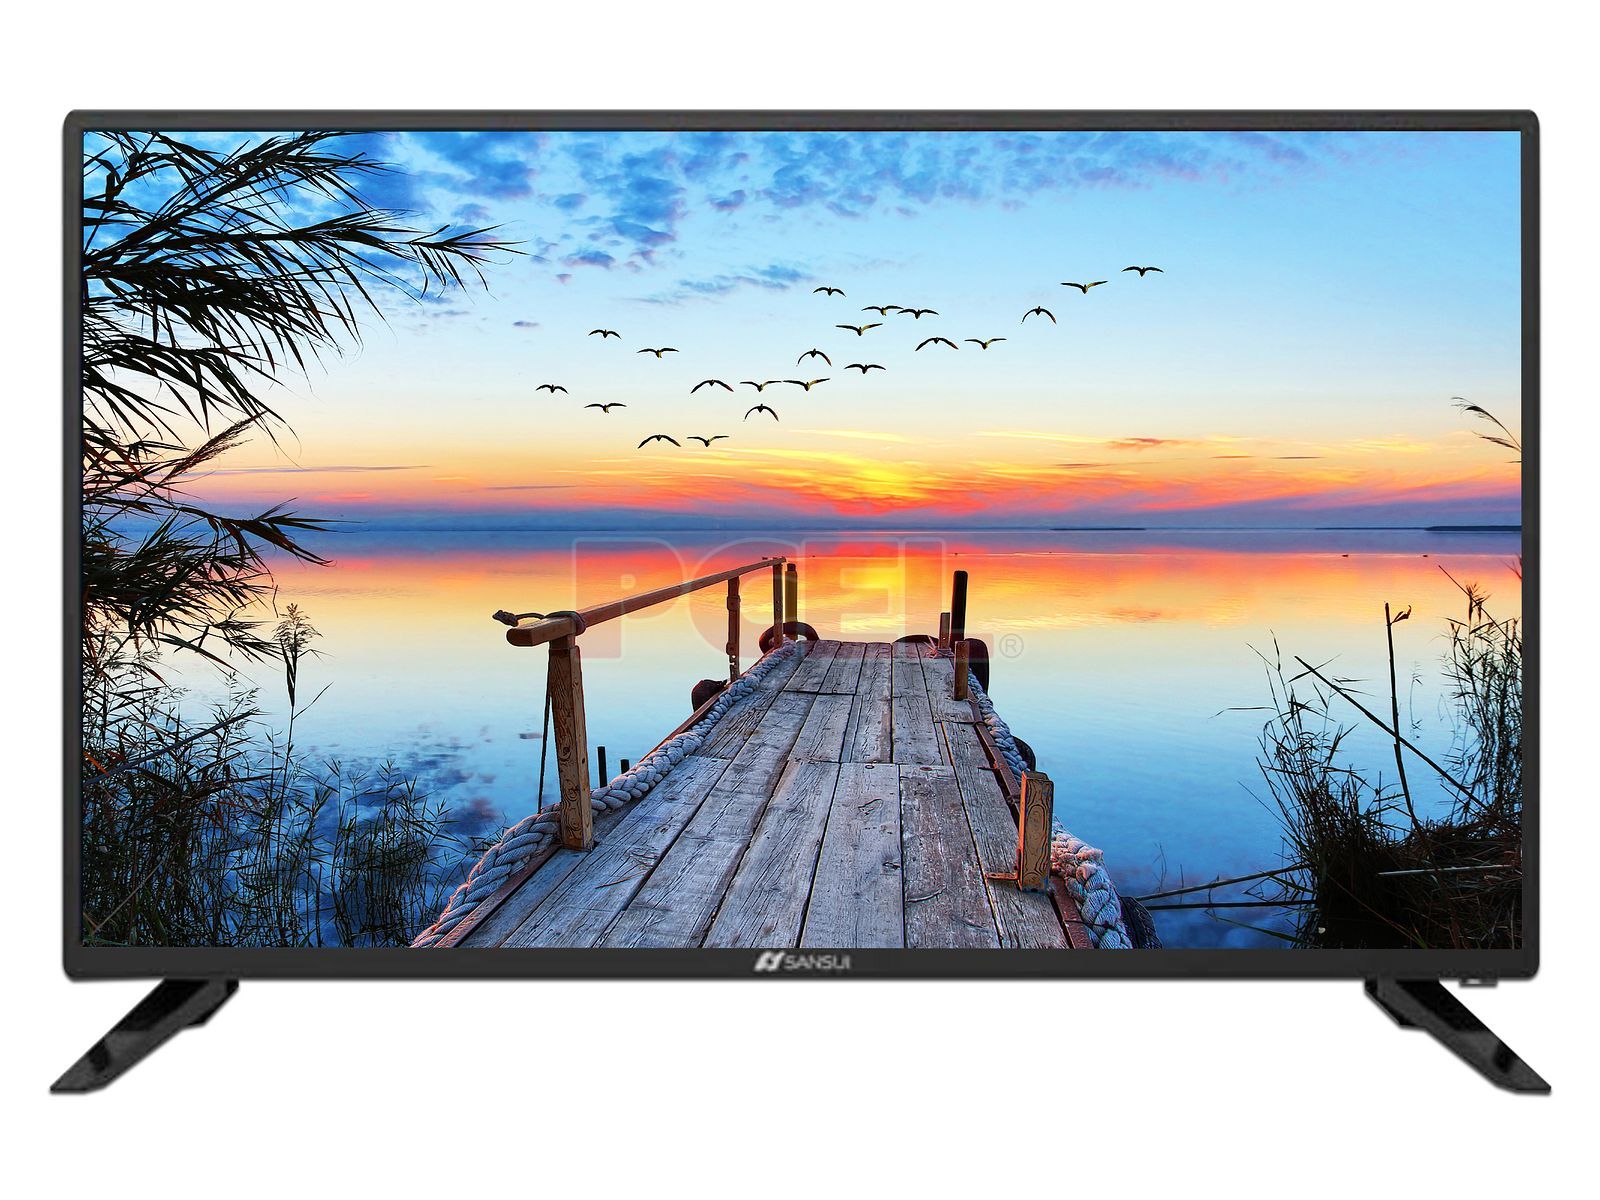 Smart TV SANSUI LED de 32, Resolución 1366 x 768, 2 HDMI, 1 USB, Color  Negro.